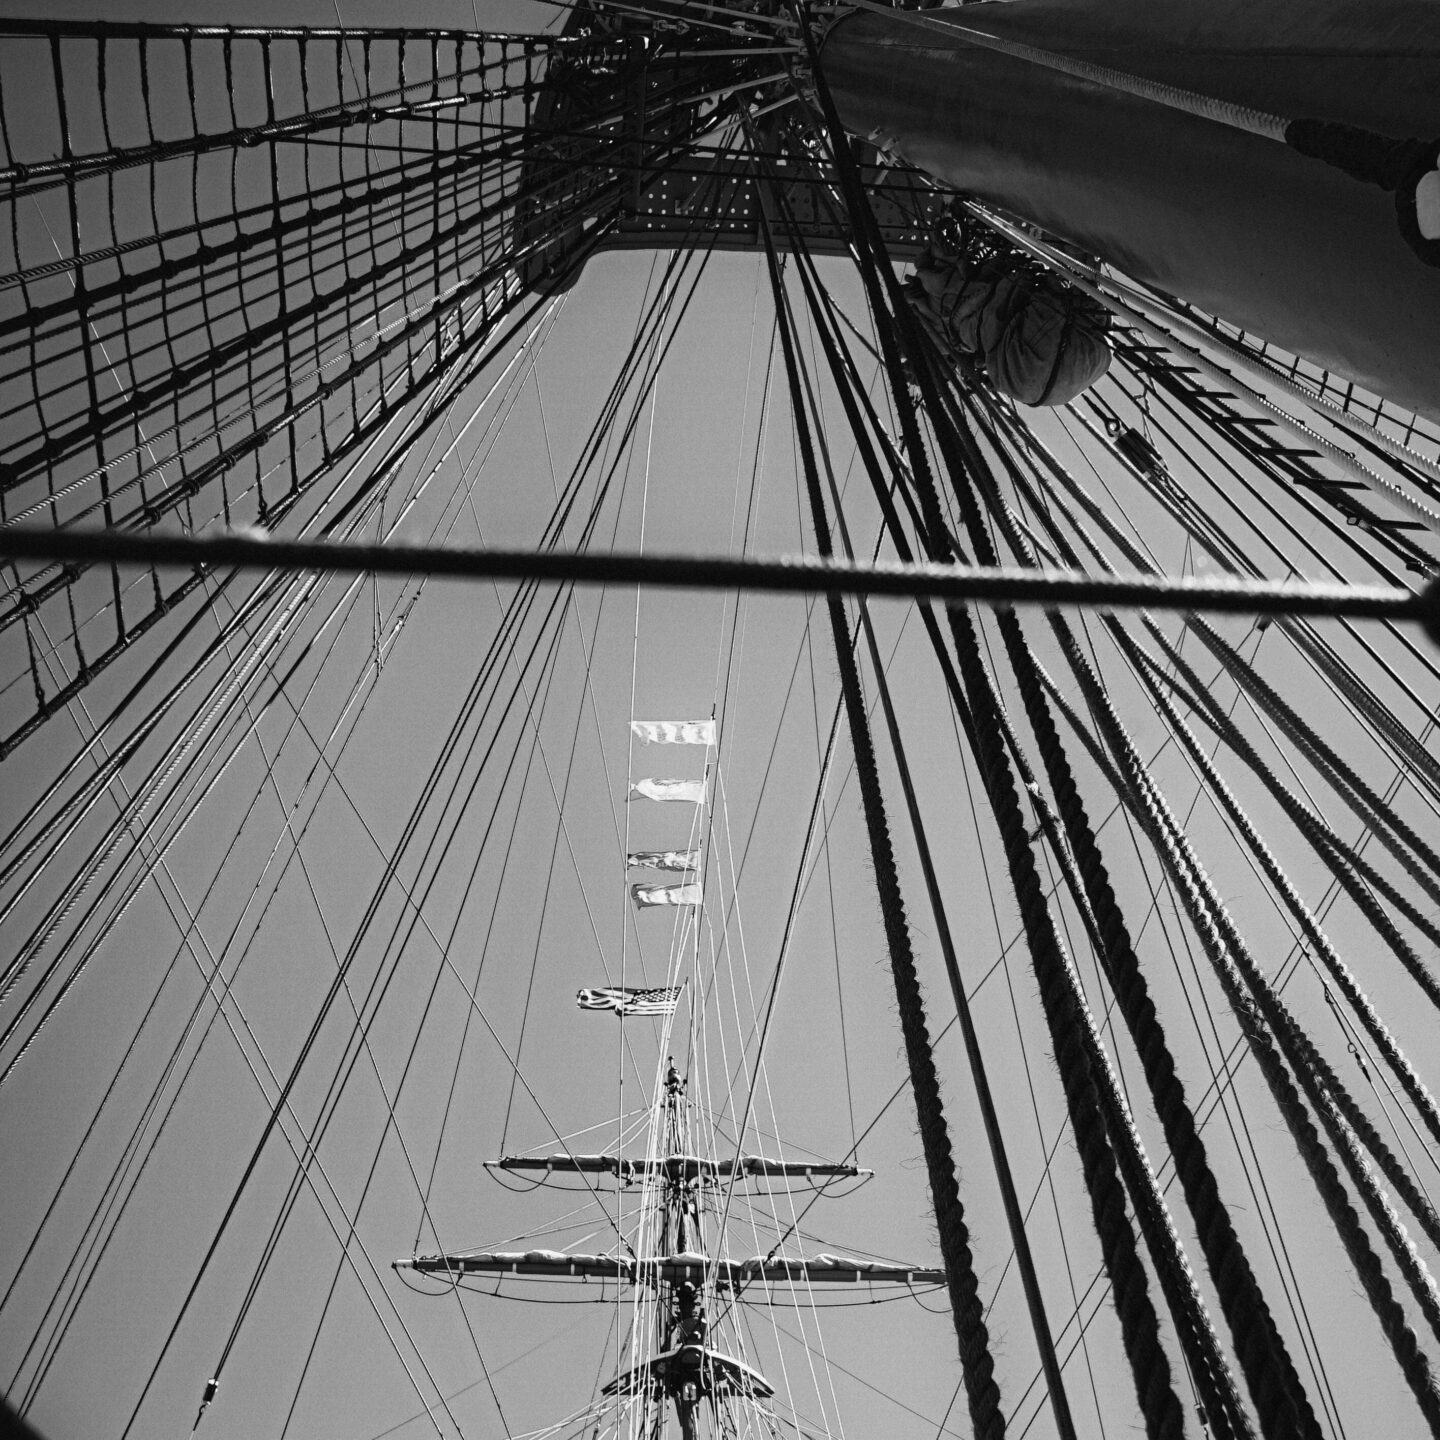 Mast View 5, The Amerigo Vespucci from Italy, Visits Los Angeles (2 photos) [Photography]